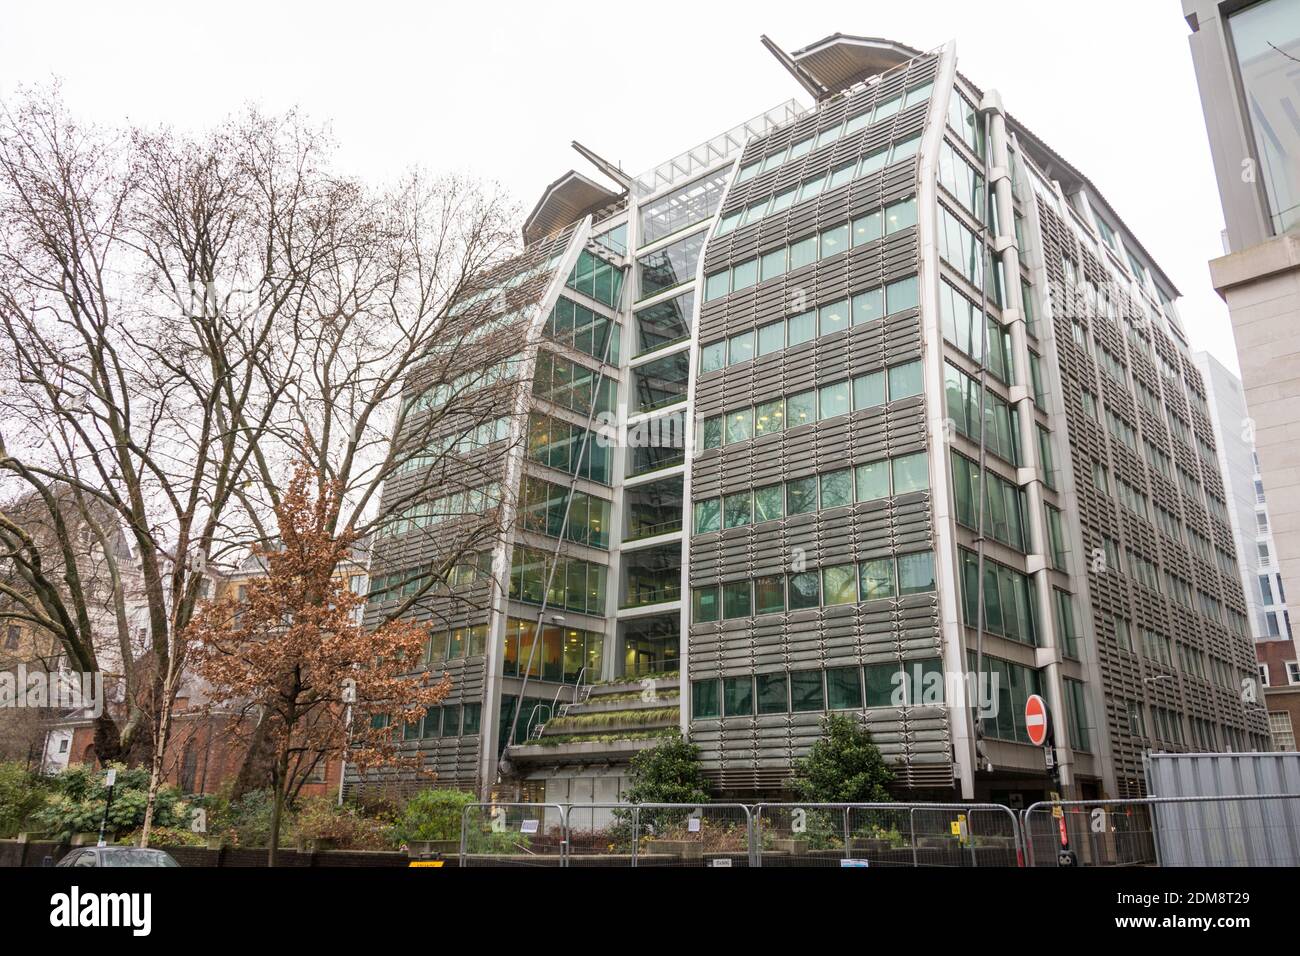 Nicholas Grimshaw's Lloyds Banking Group building at 25 Gresham Street, City of London, U.K. Stock Photo